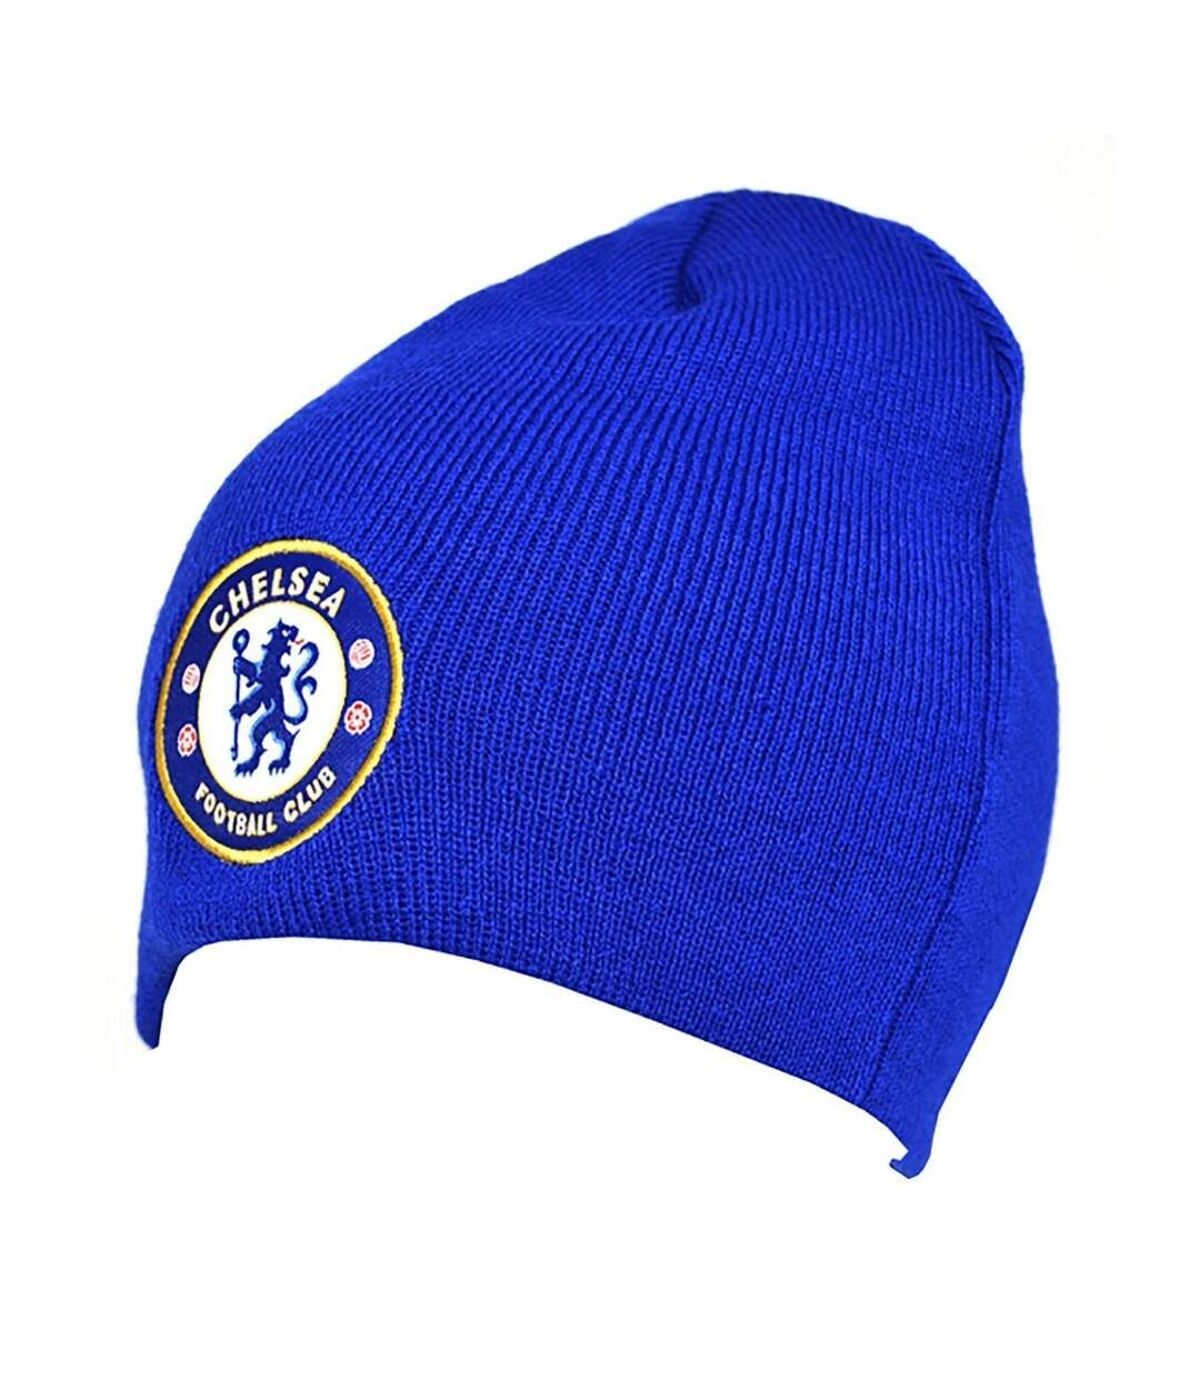 Chelsea FC - Bonnet (Bleu roi) - UTCS111